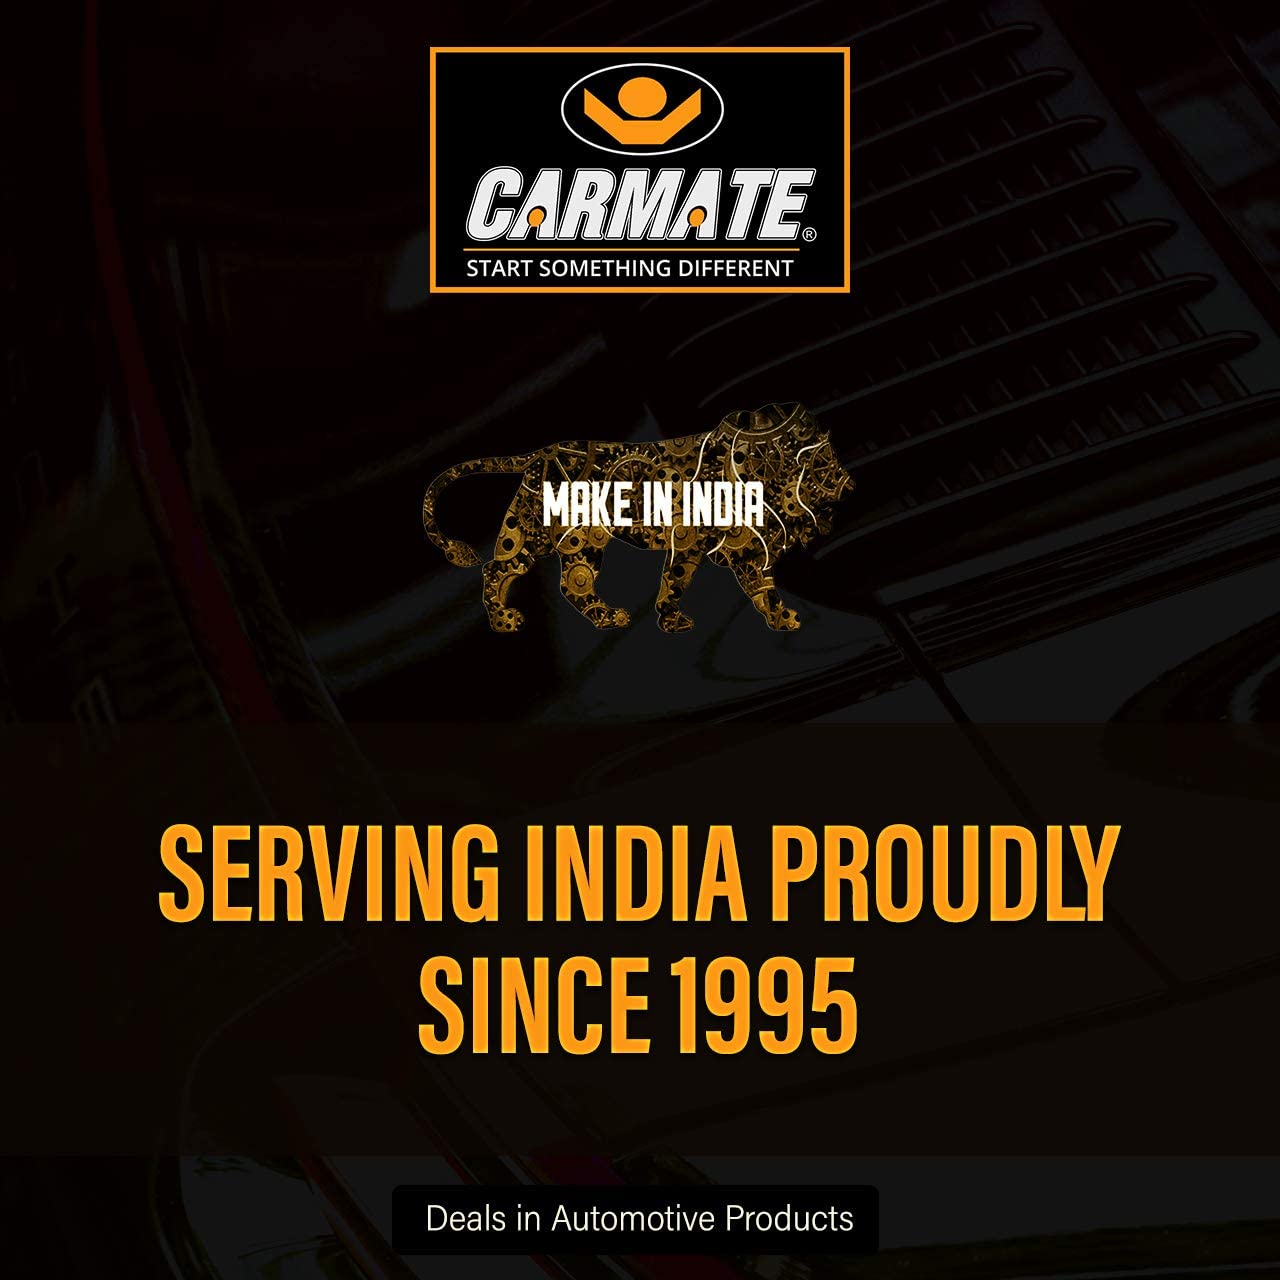 Carmate ECO Car Body Cover (Grey) for Fiat - Fiat - CARMATE®